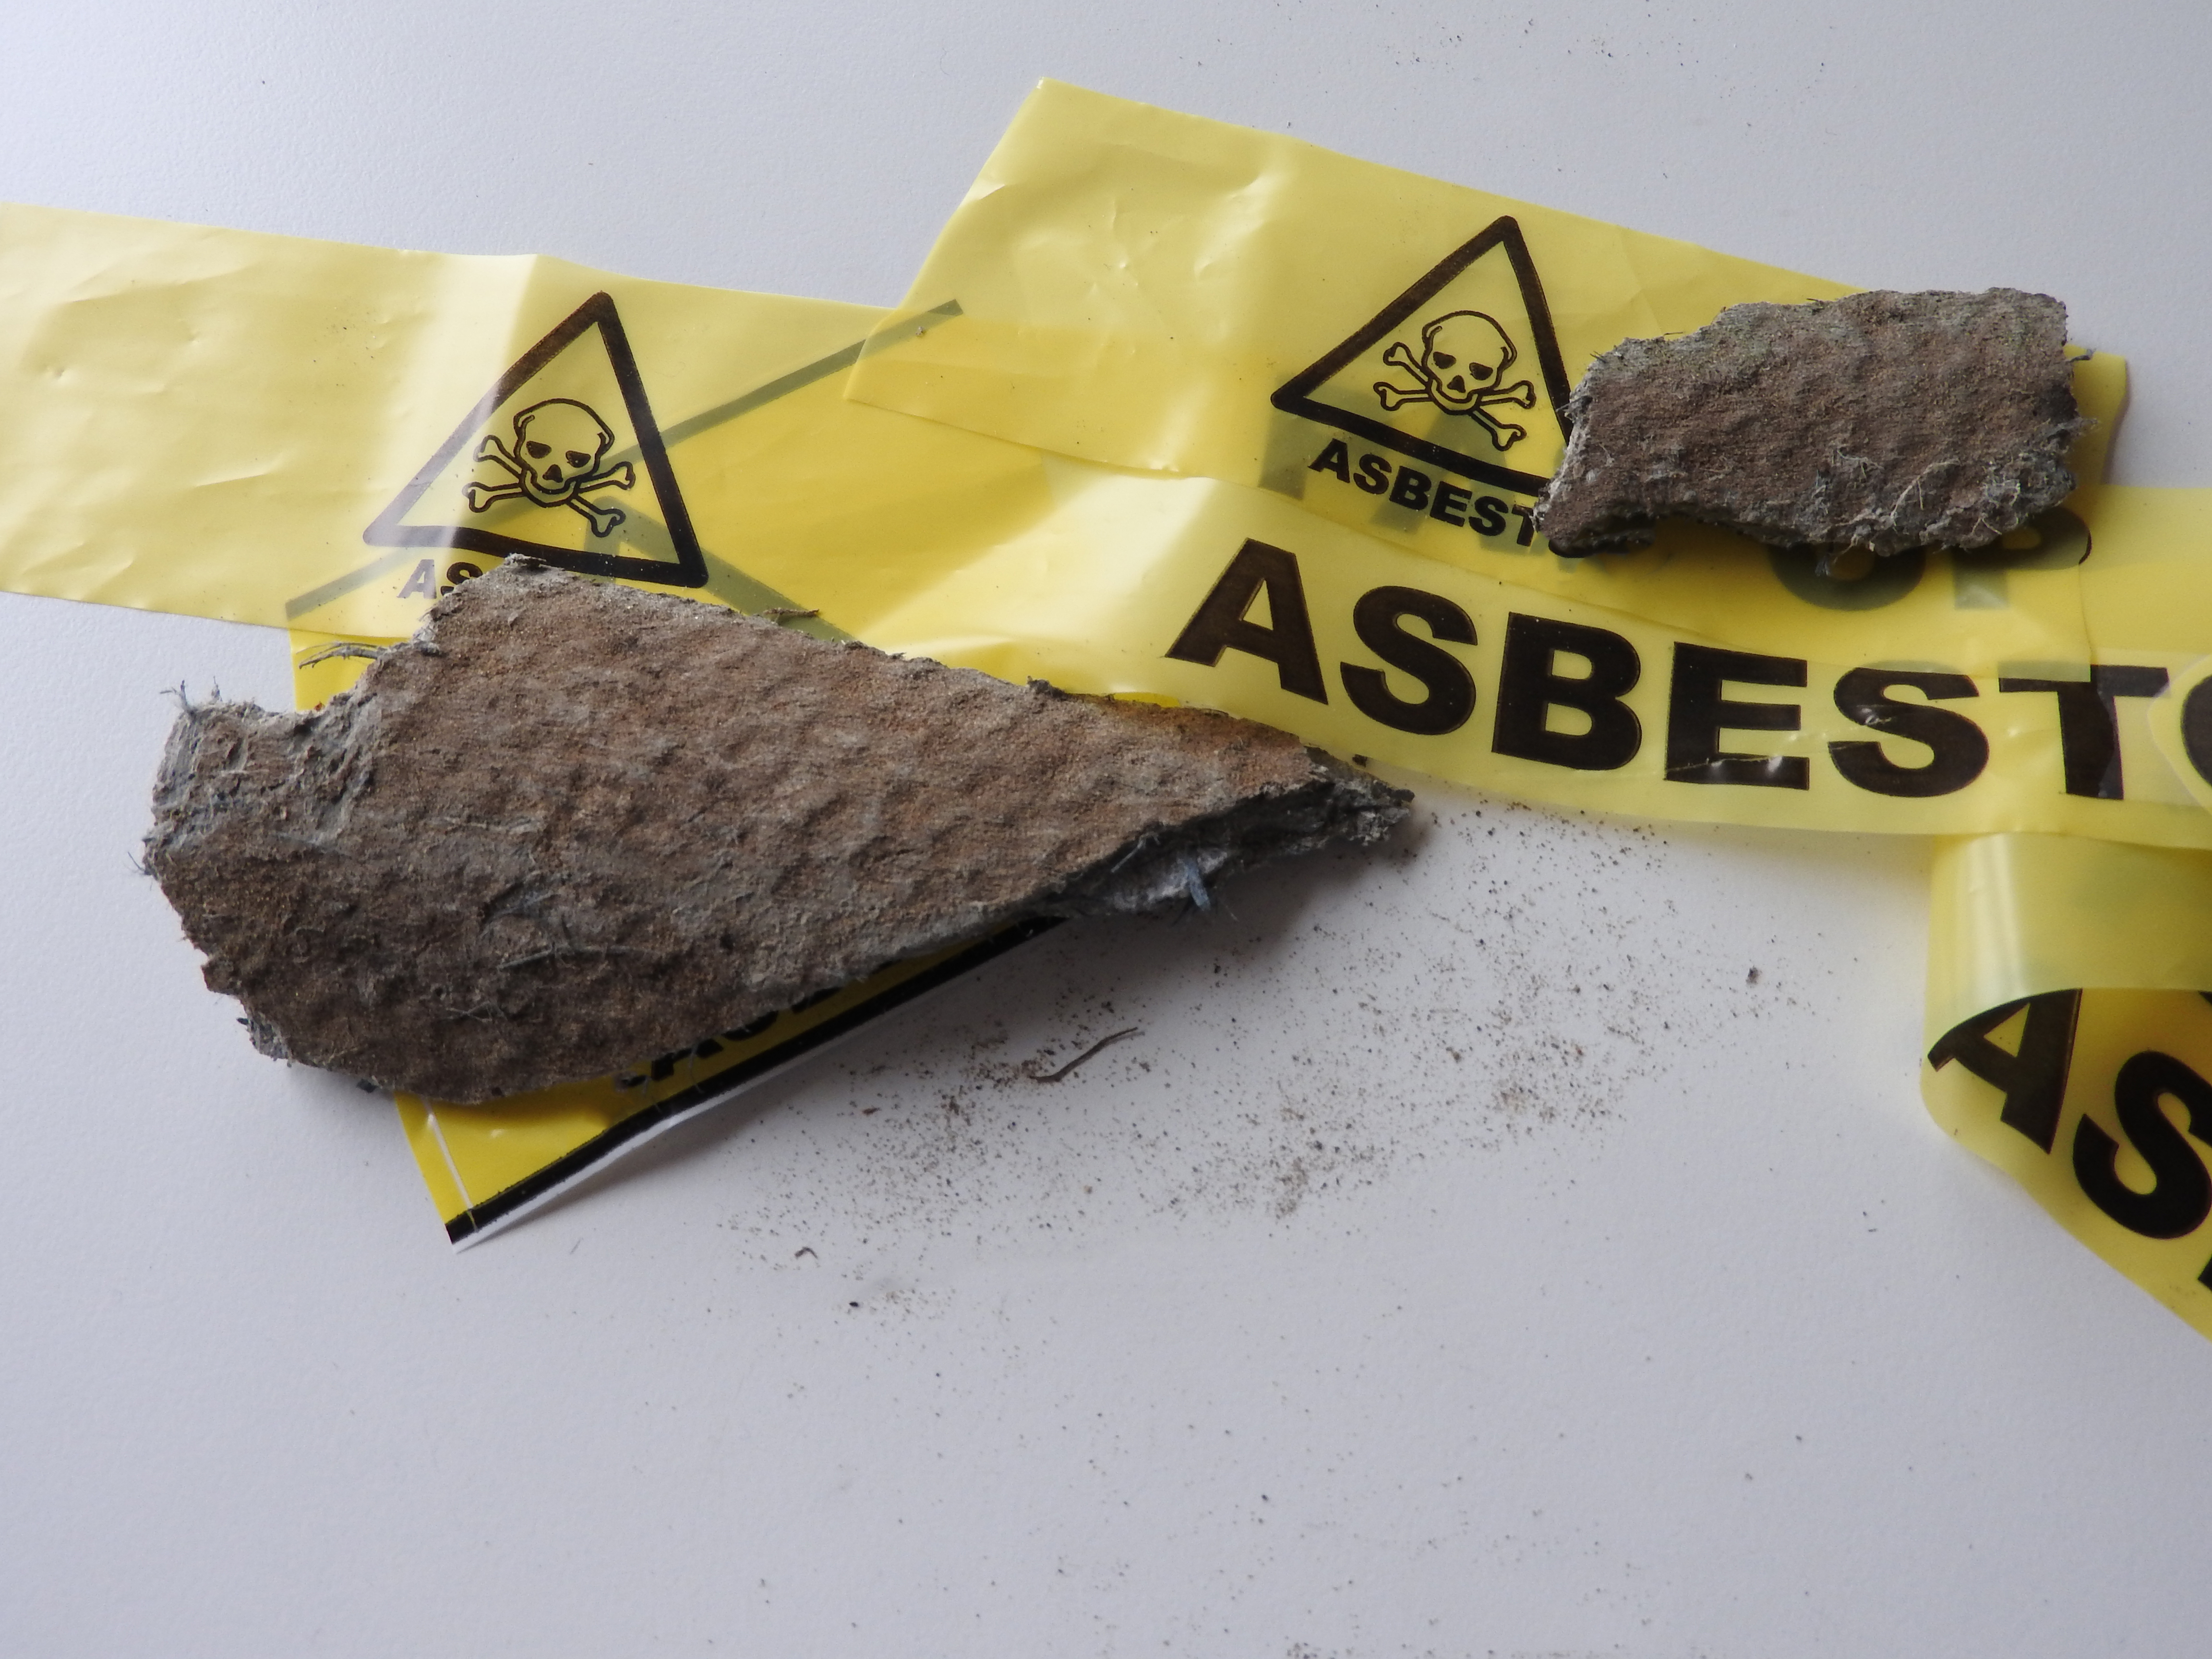 https://www.rova.nl/media/uploads/Asbest_Lint.jpg